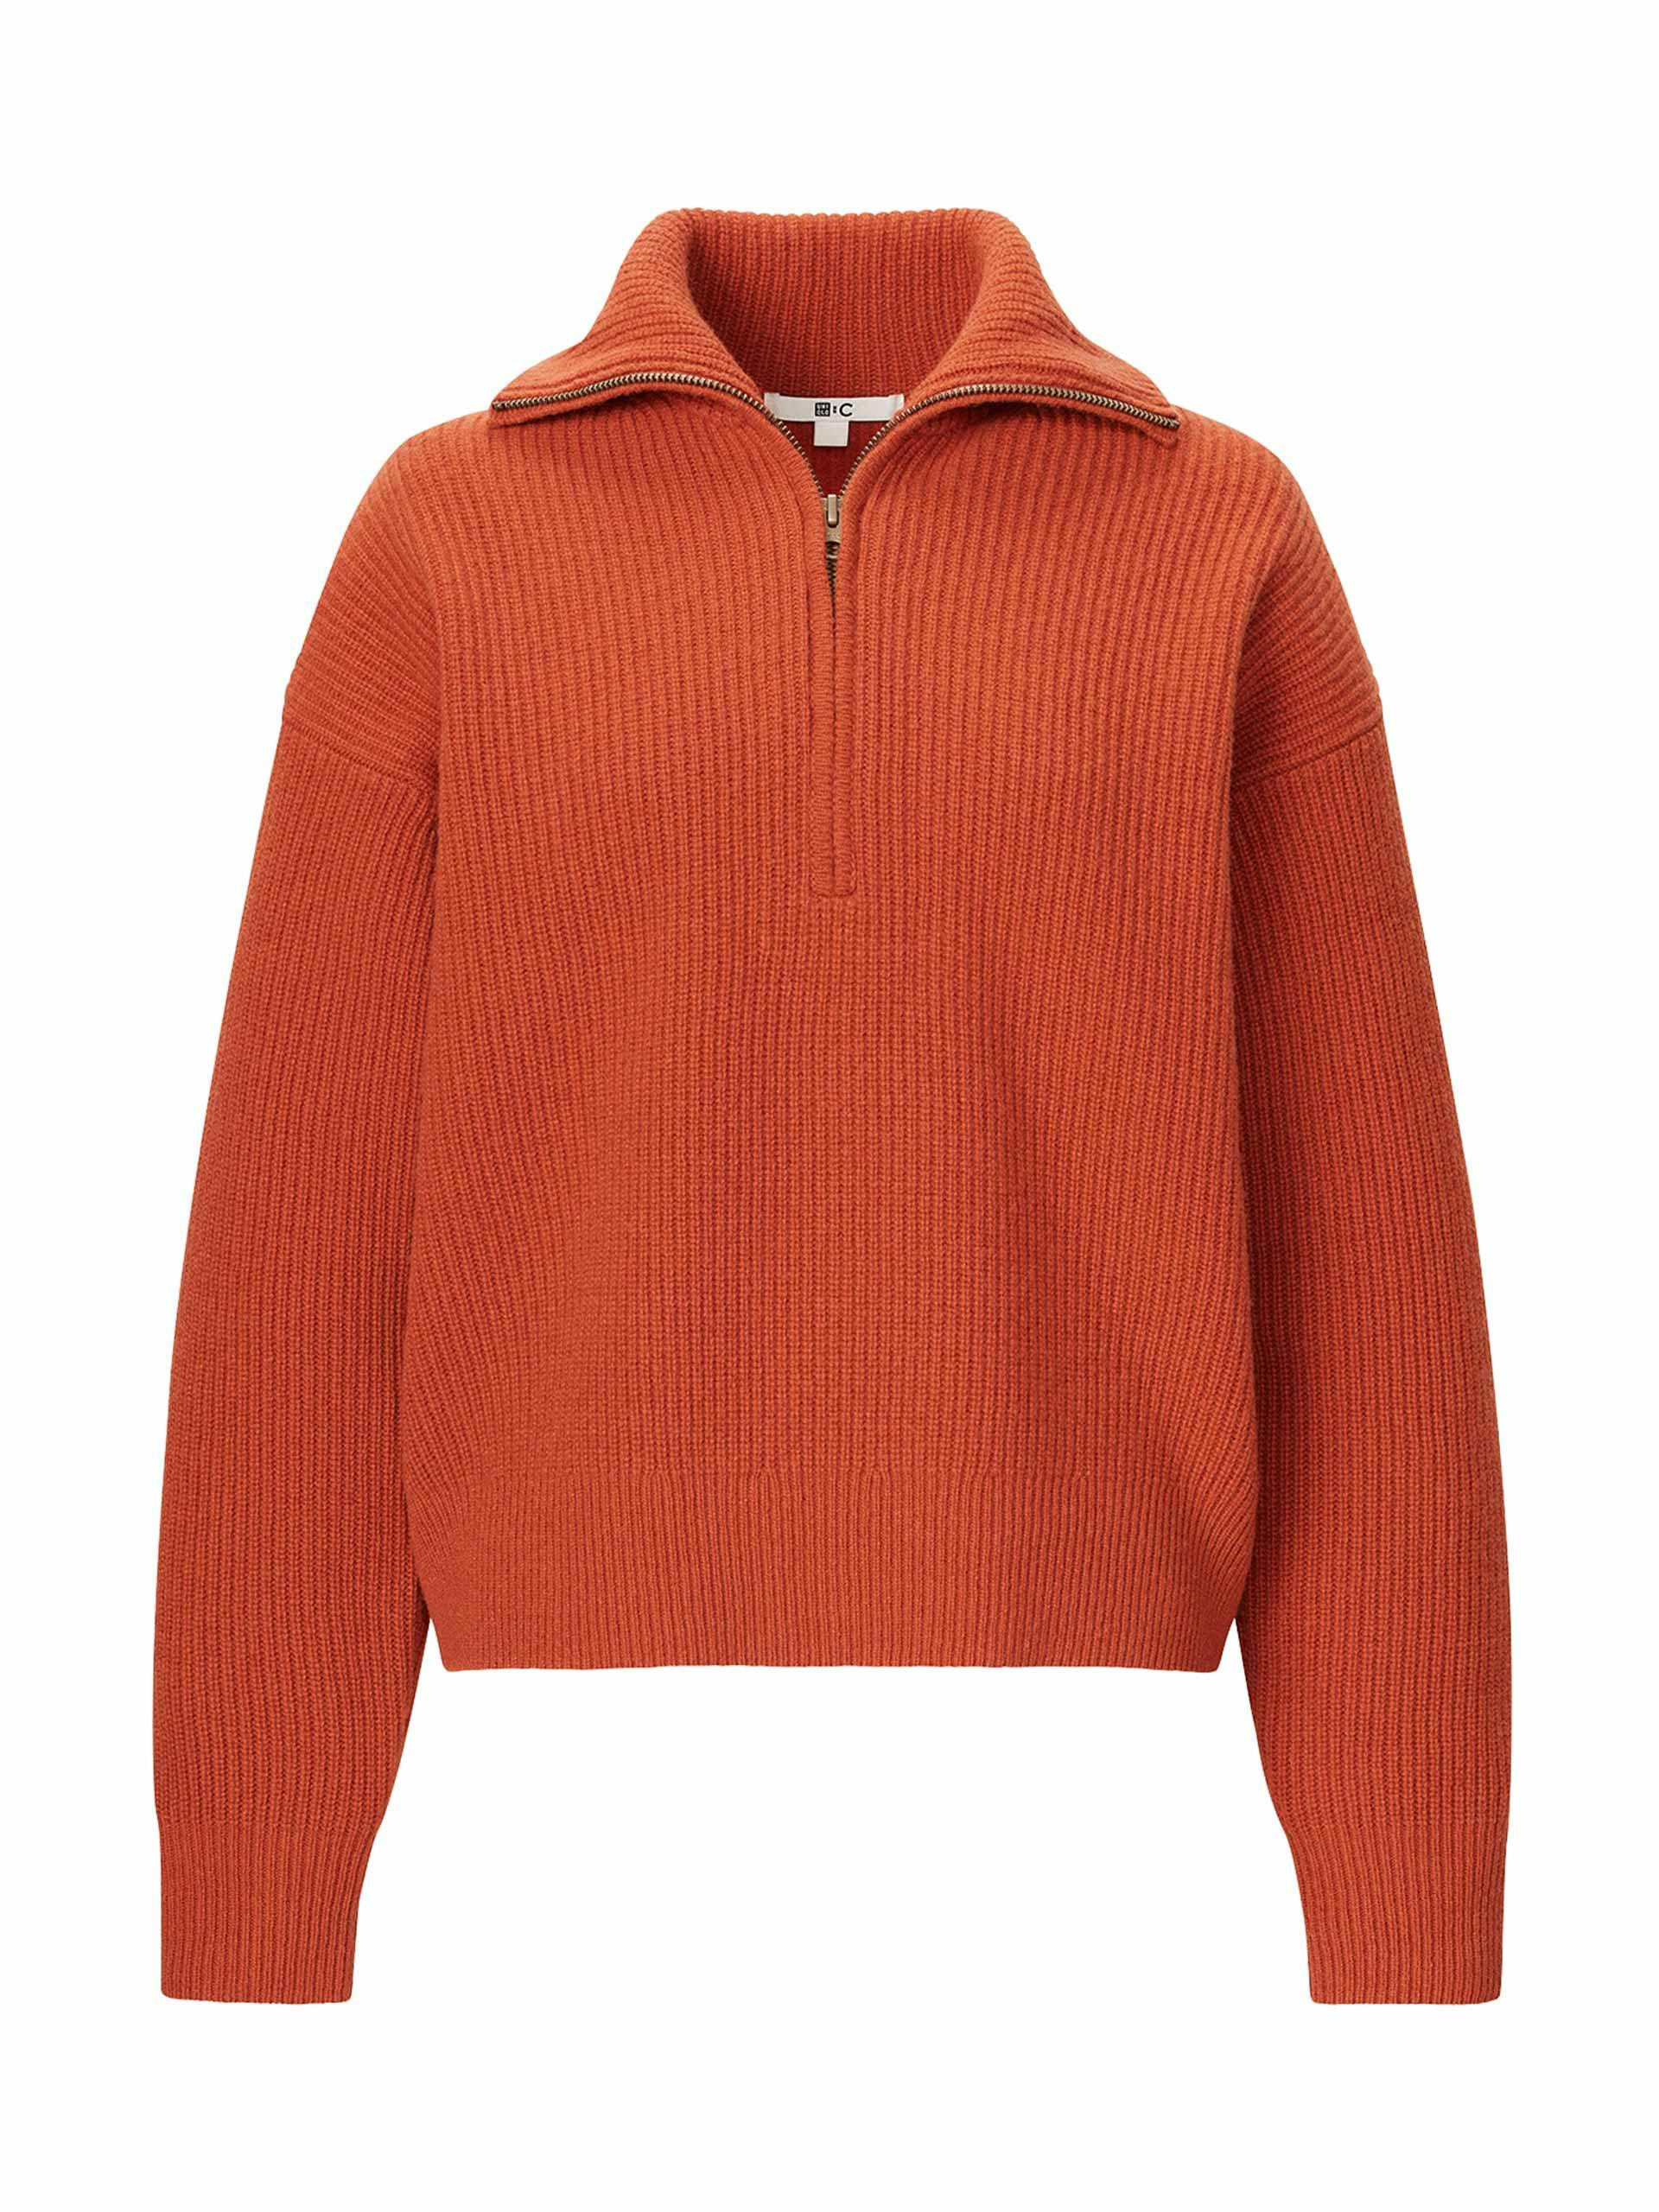 Orange half-zipped jumper